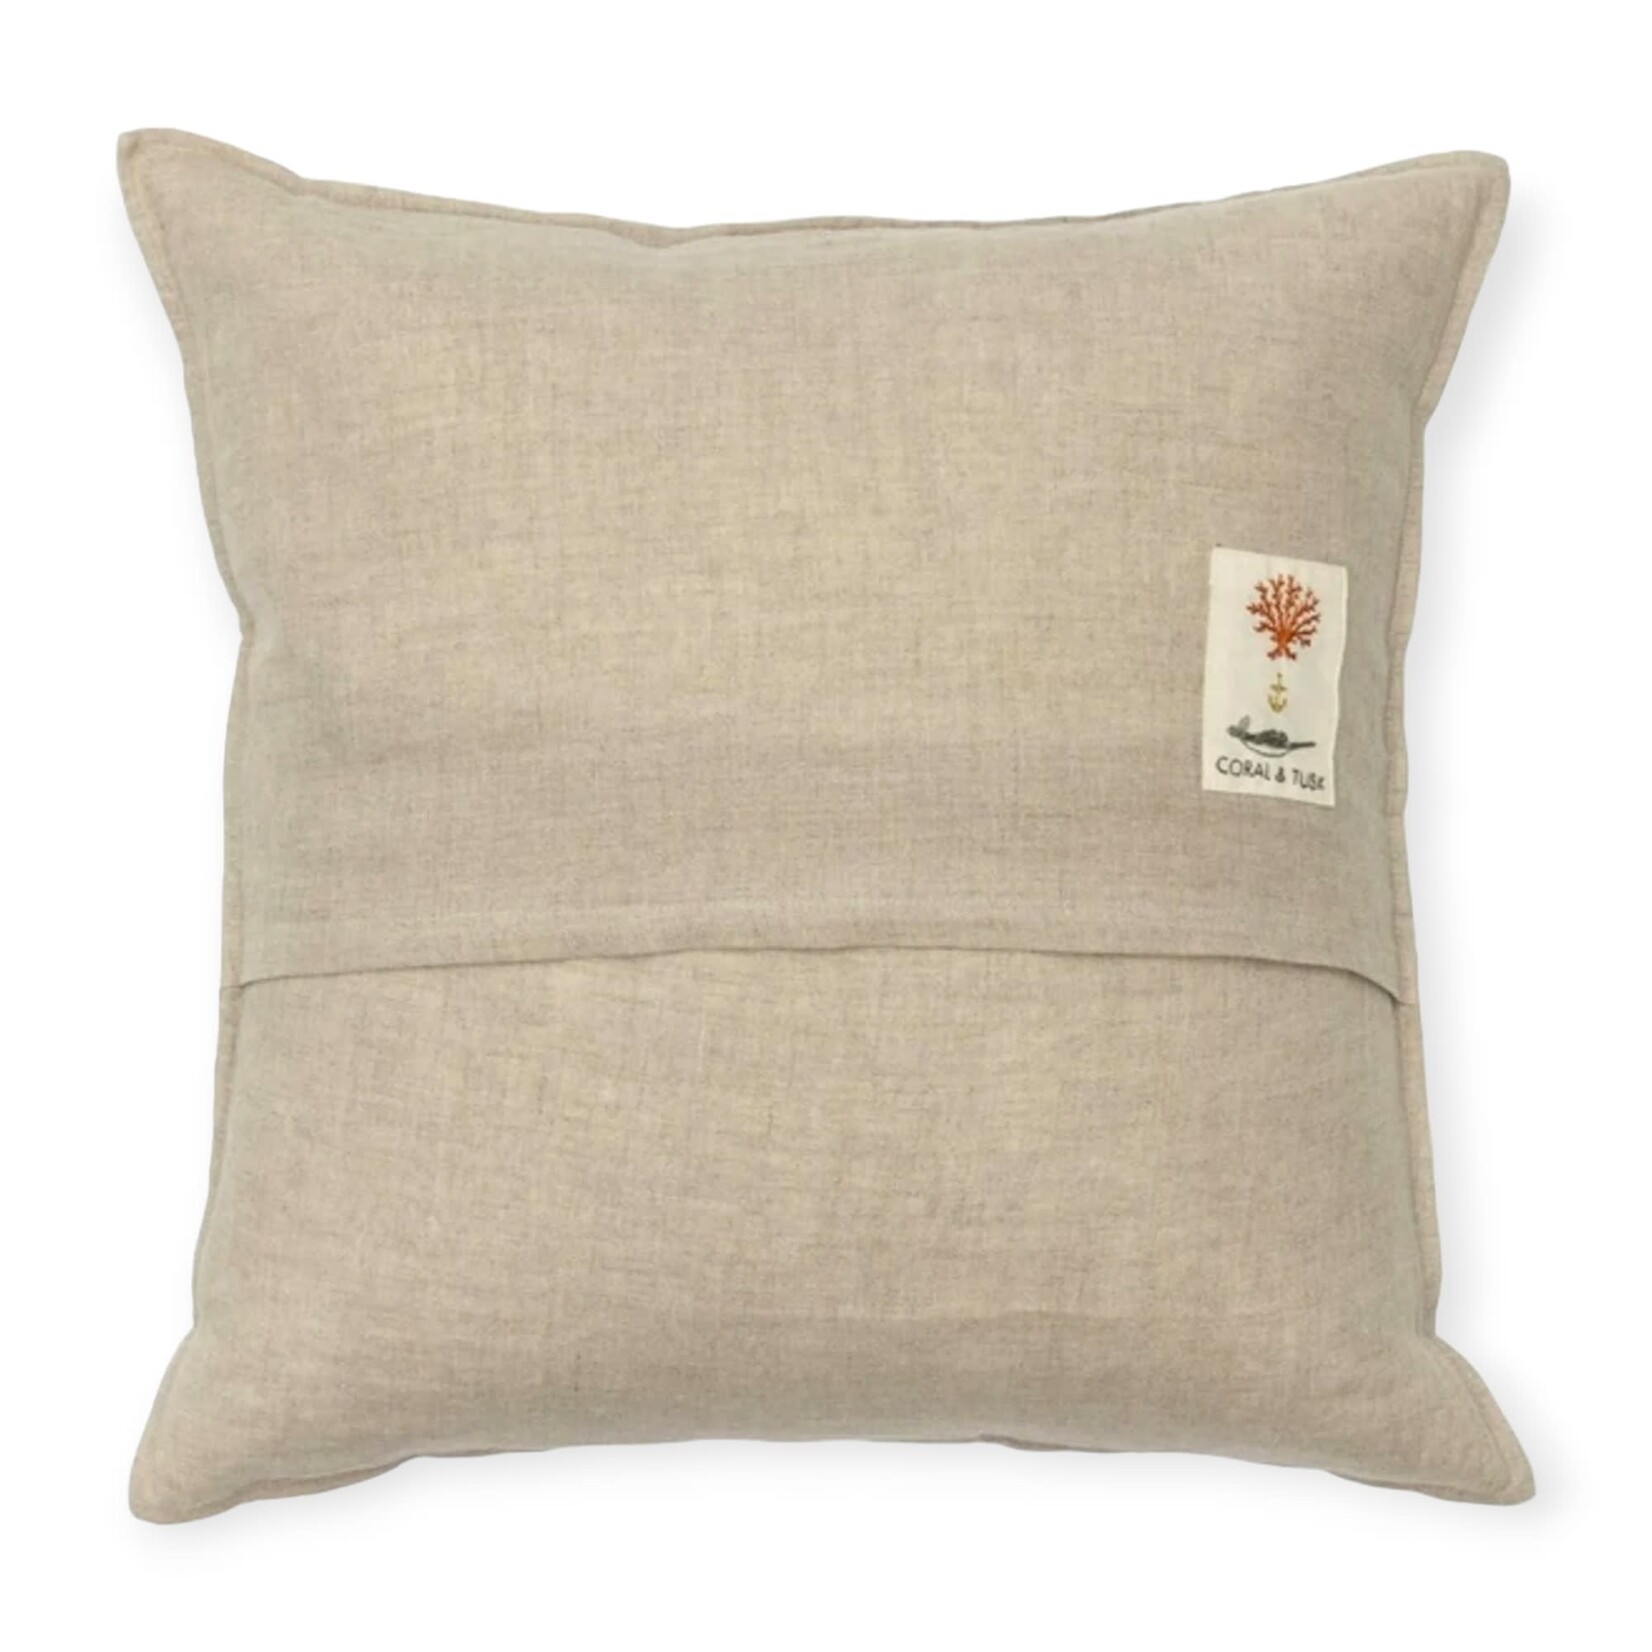 Coral & Tusk Owl Mama Pocket Pillow